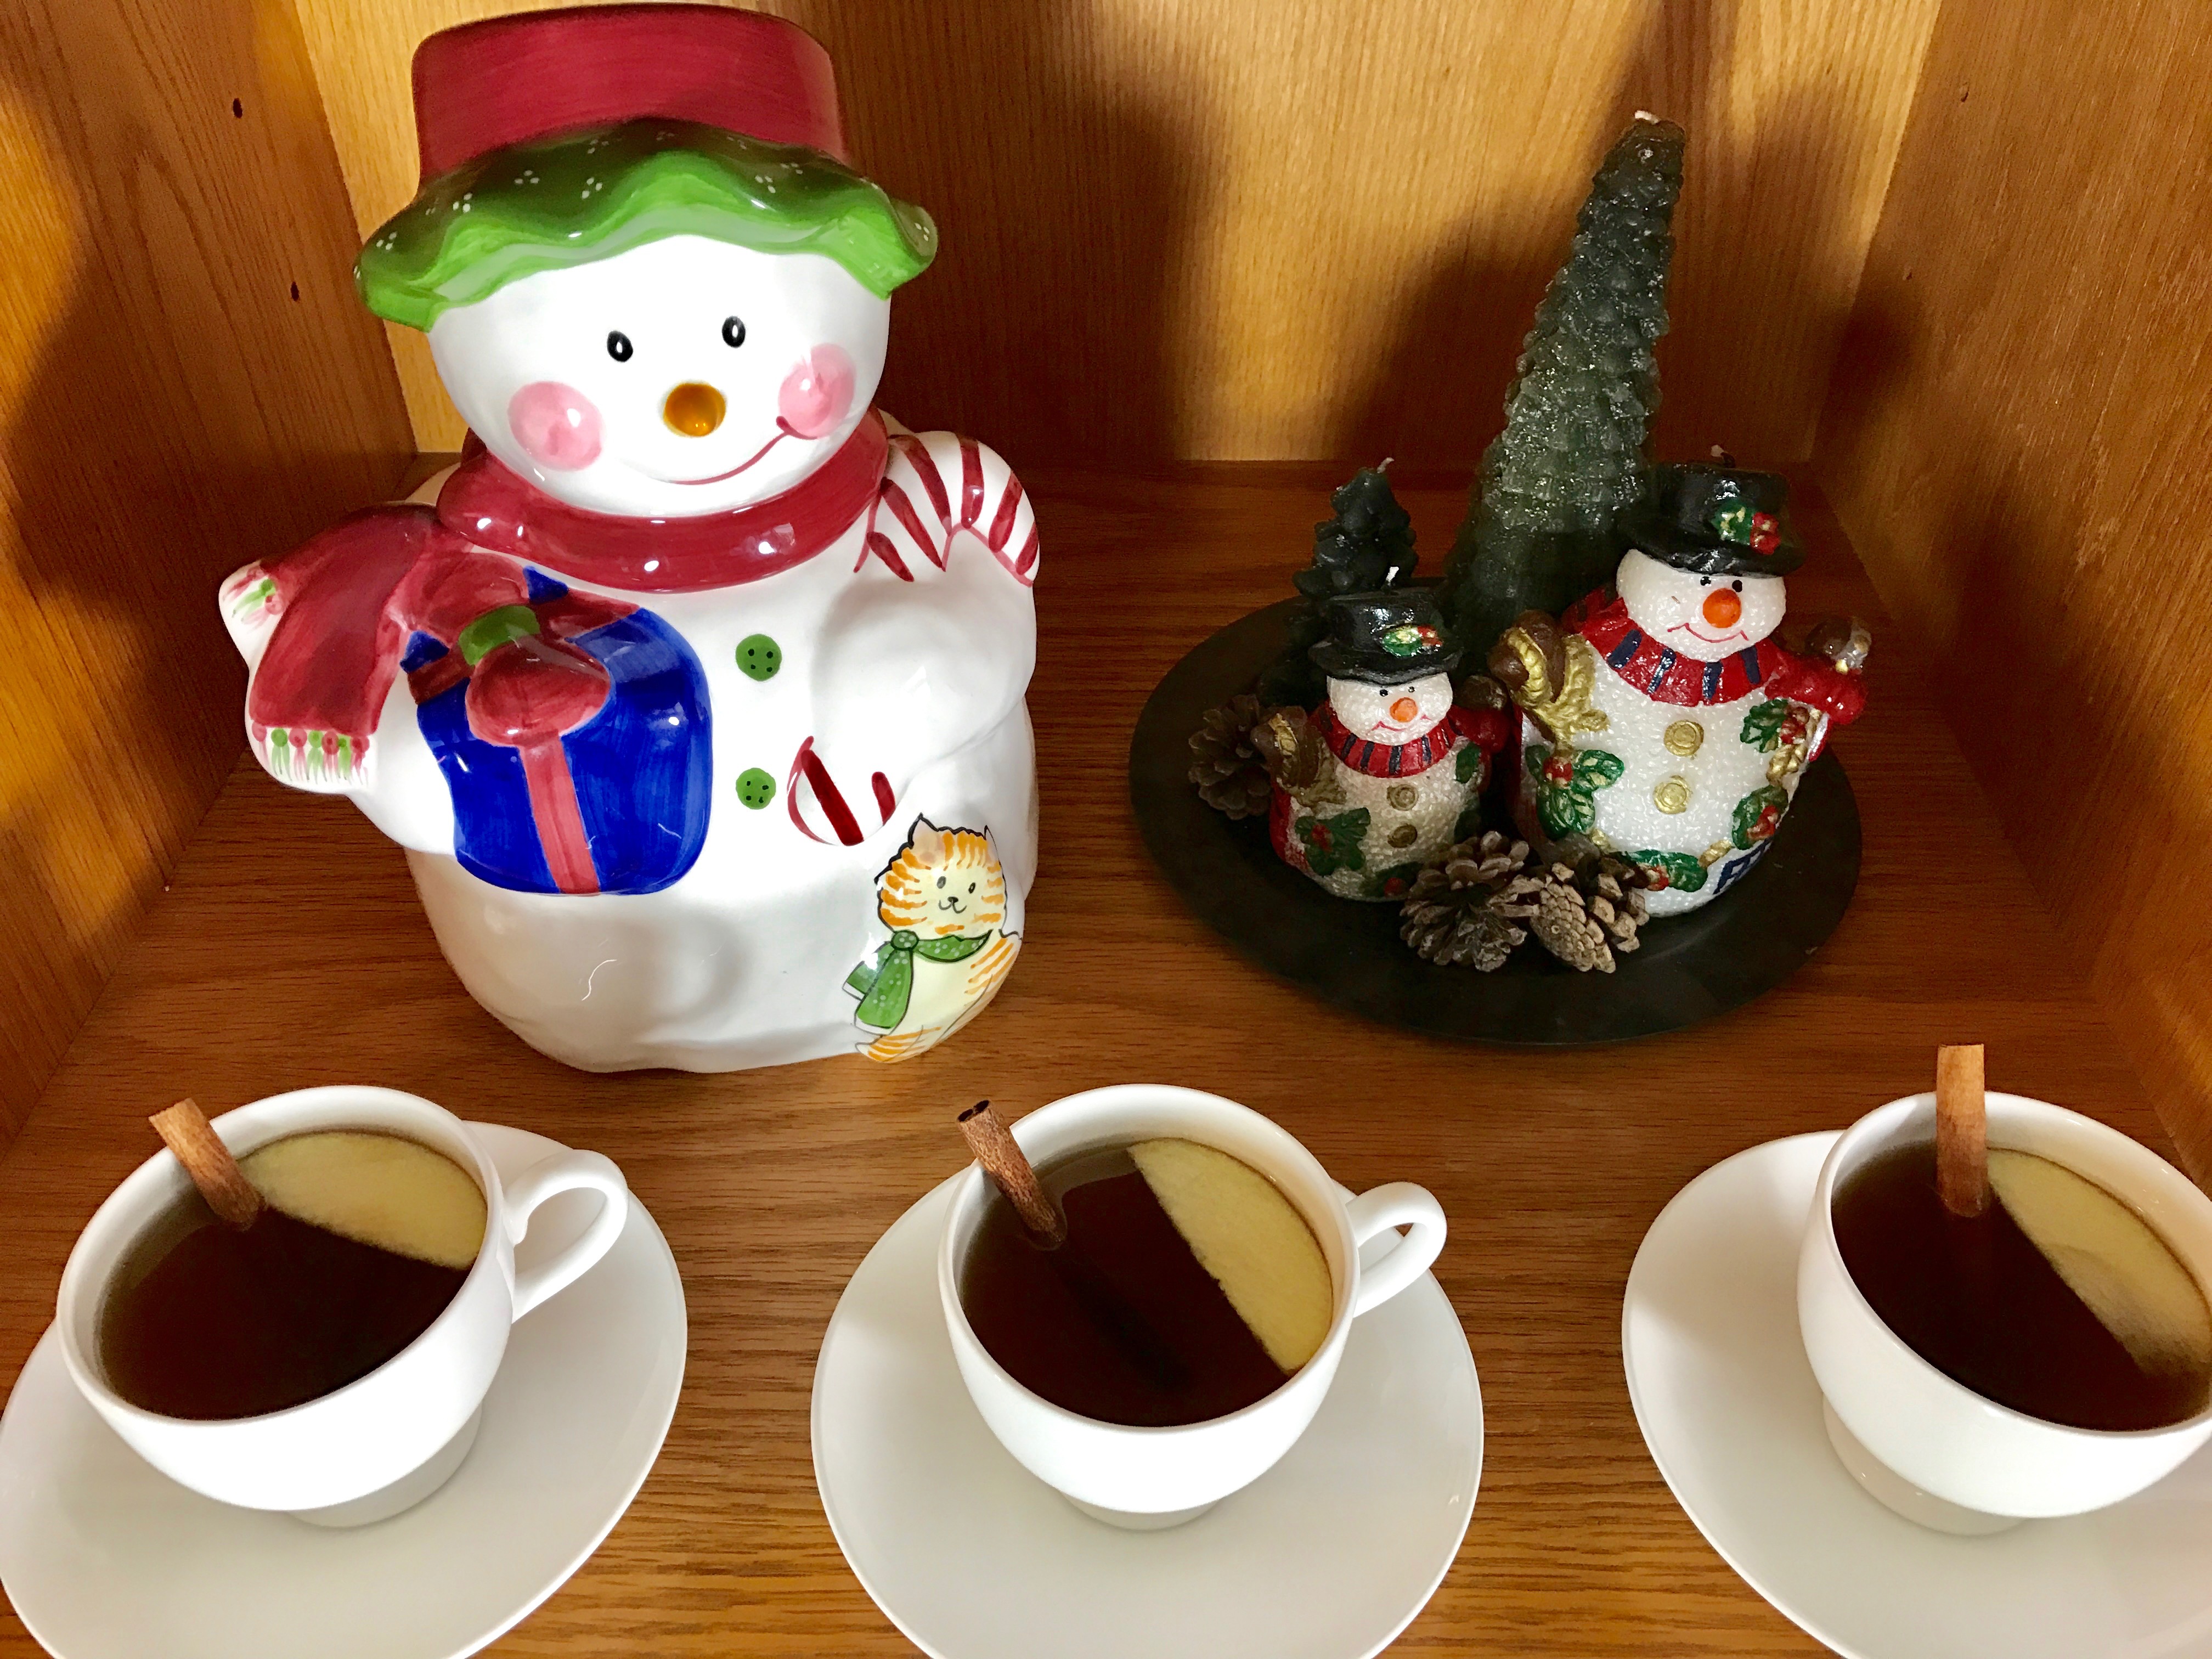 A Child's Winter Wonderland Tea Party Menu